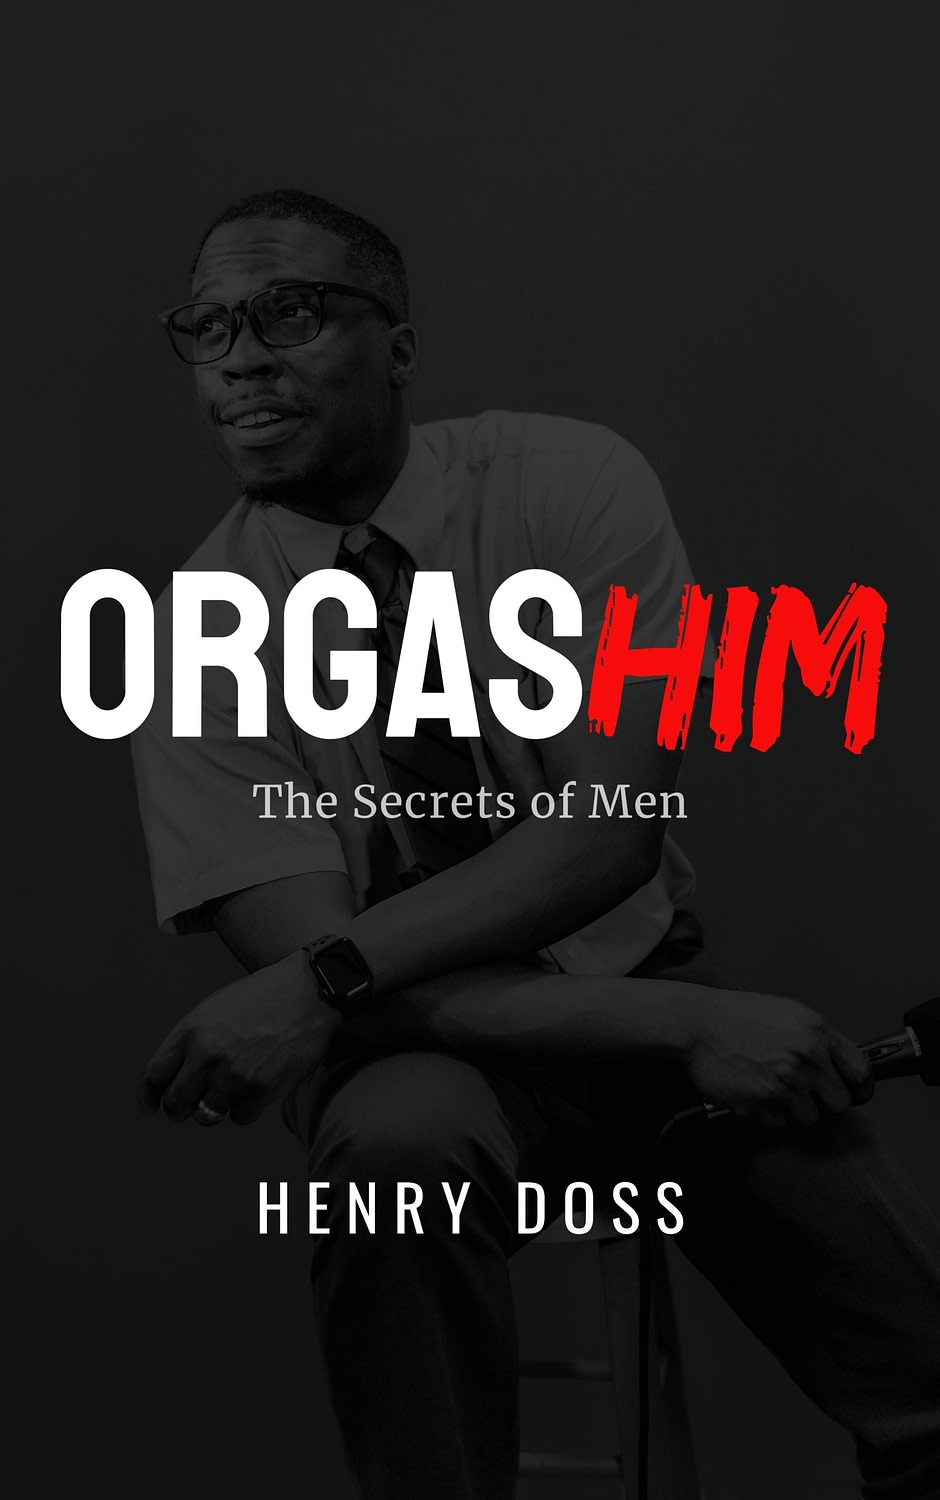 OrgasHIM book- The Secrets of Men - by Henry Doss